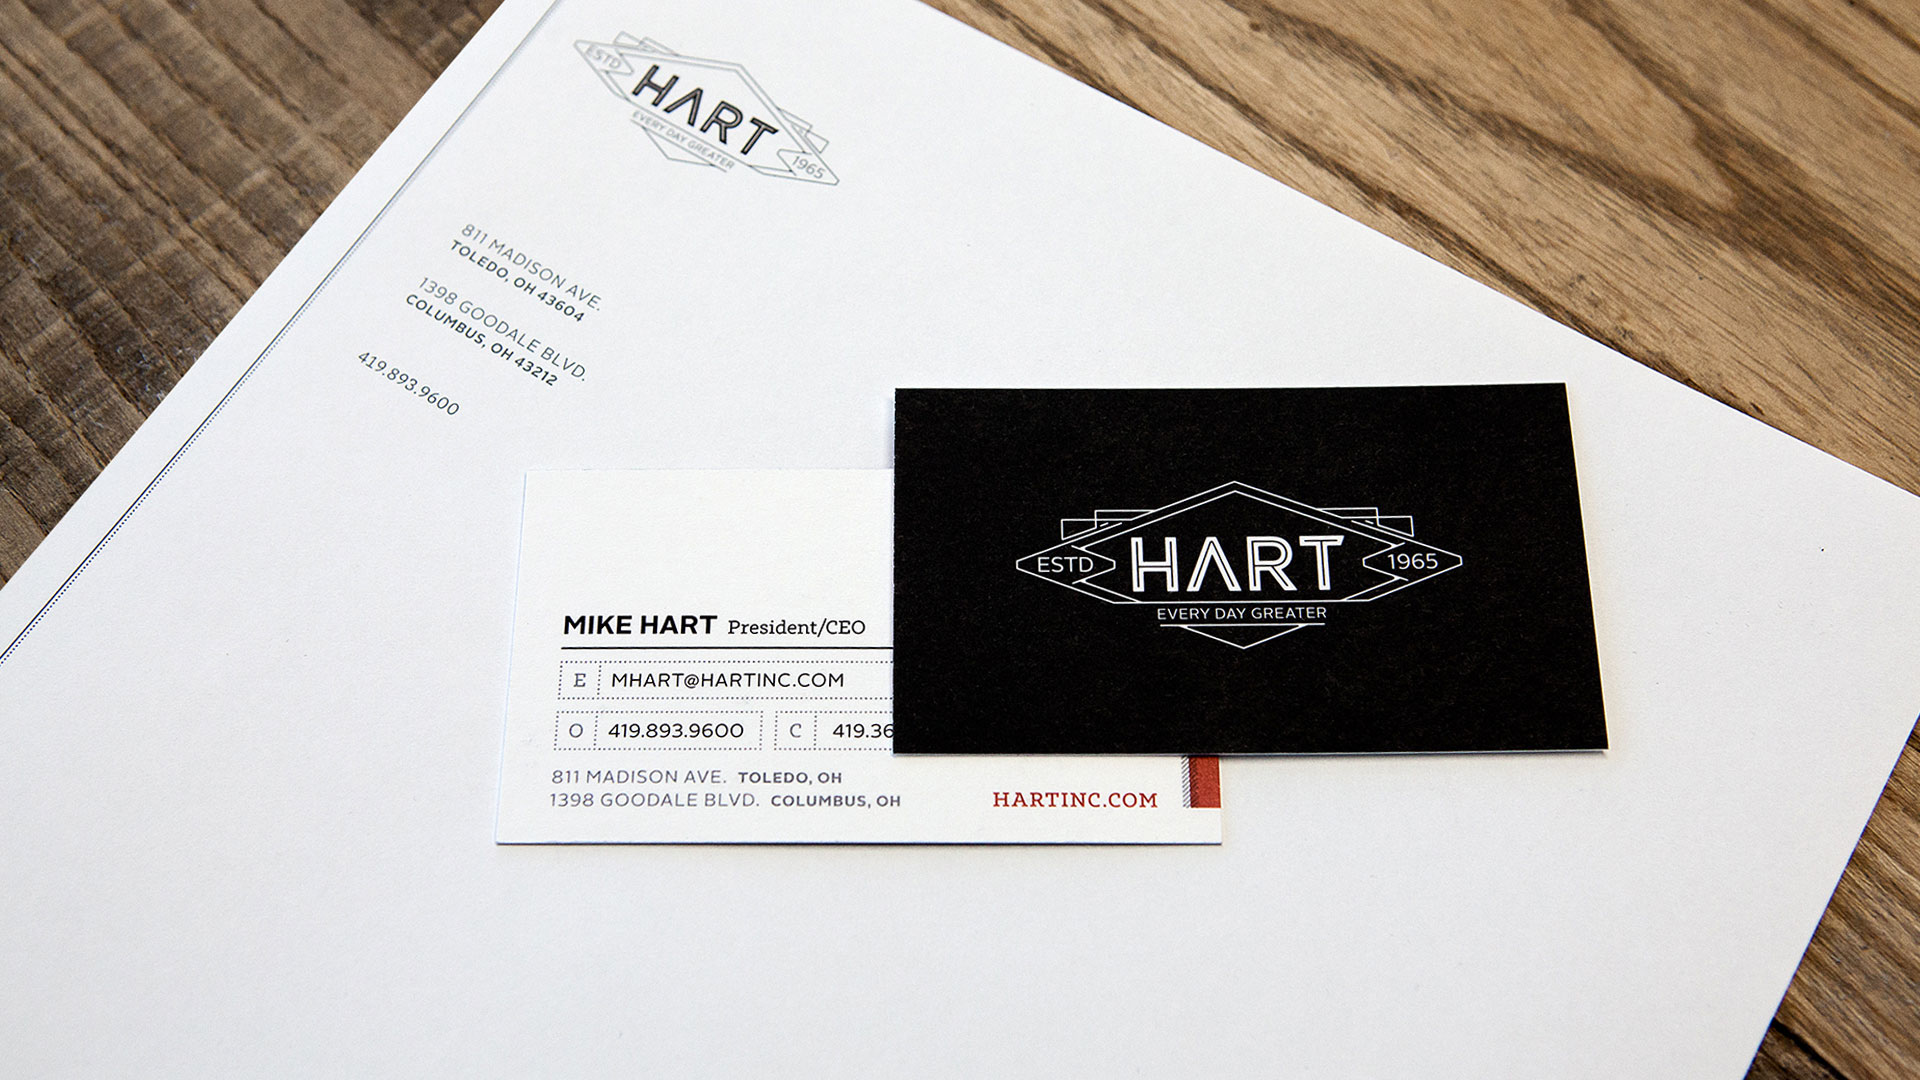 New Hart Branded Materials